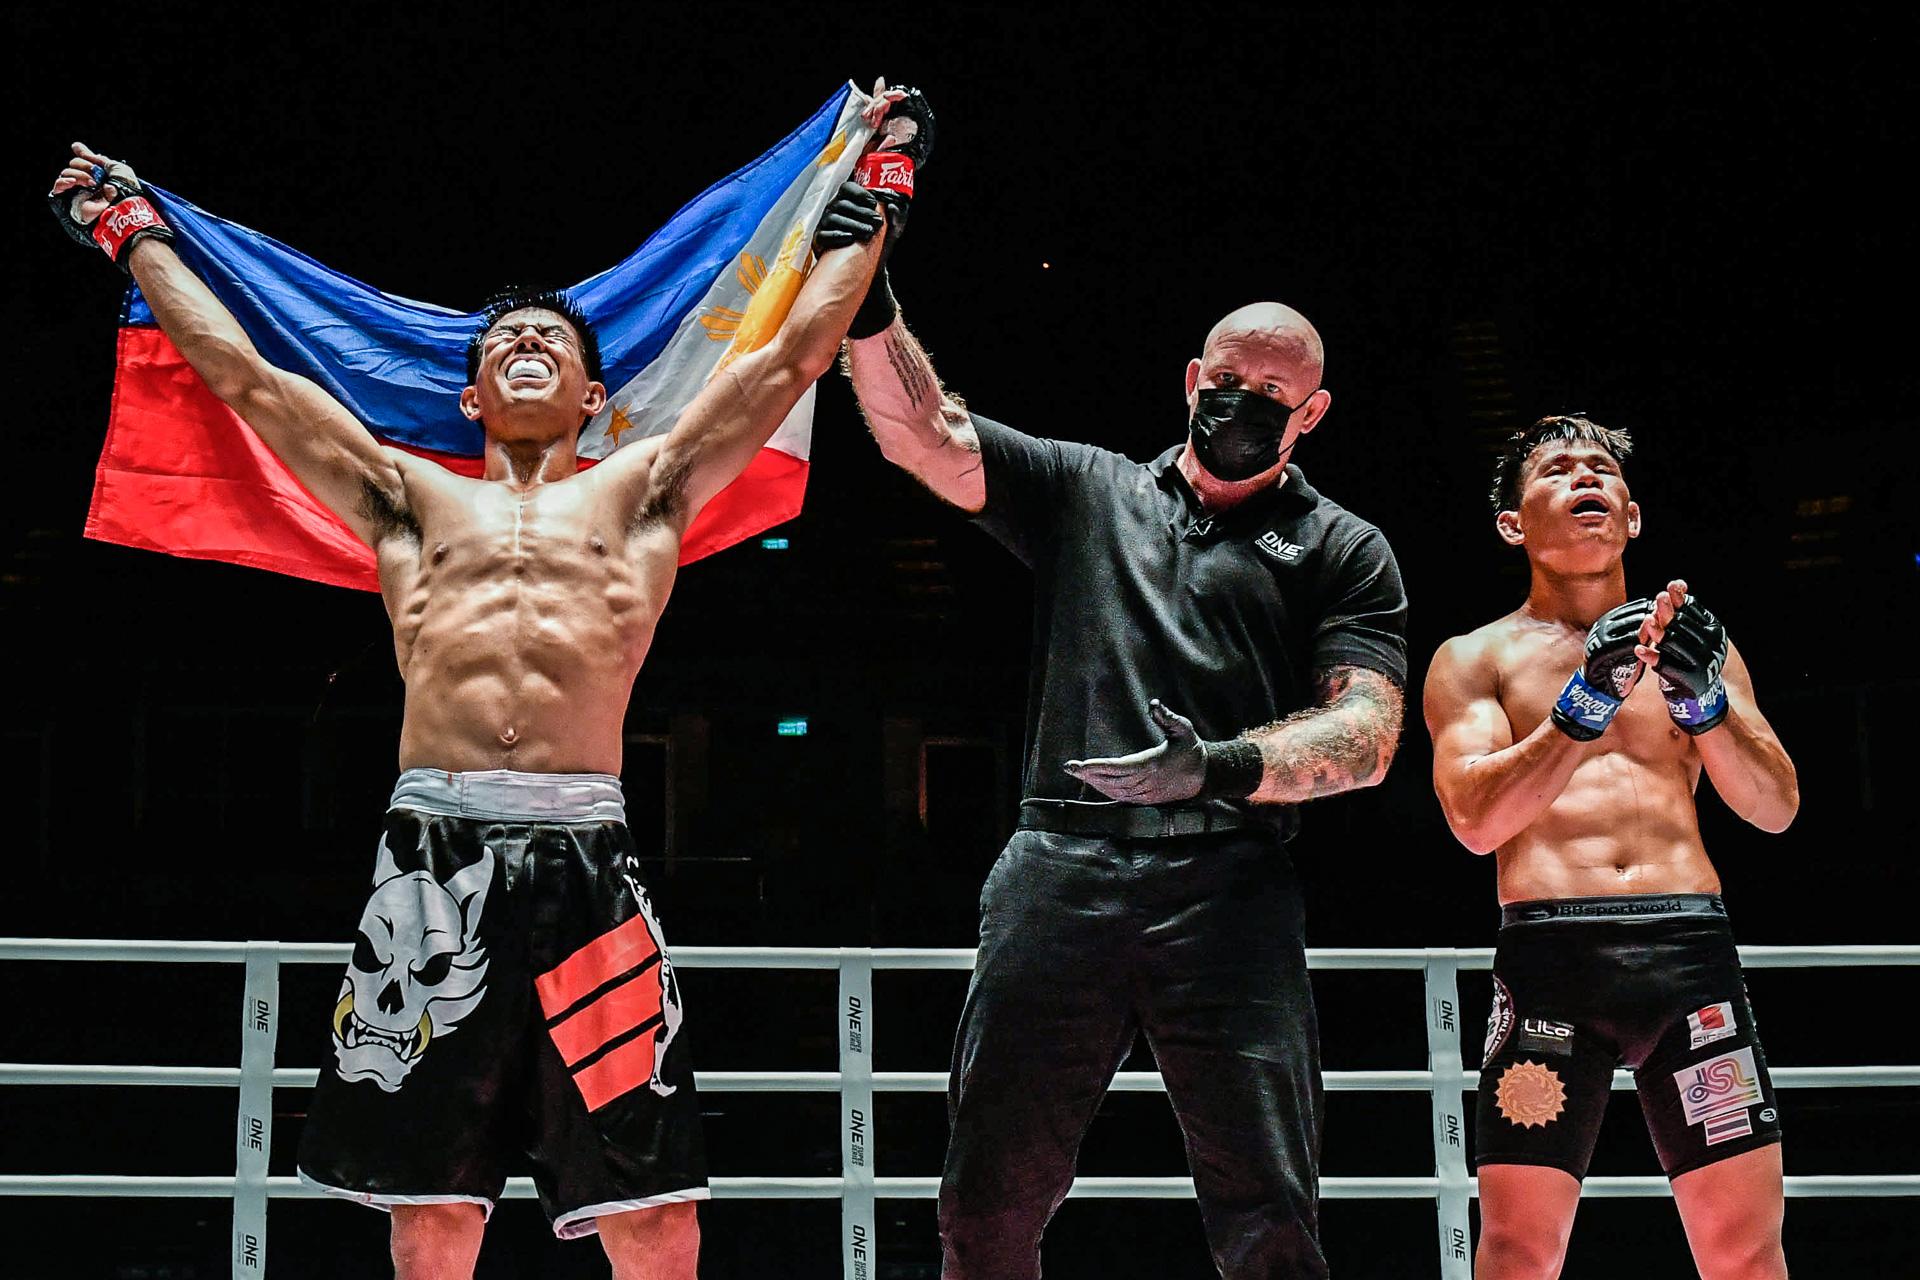 Filipino MMA fighter Drex Zamboanga wins ONE debut by putting Thai foe to sleep GMA News Online